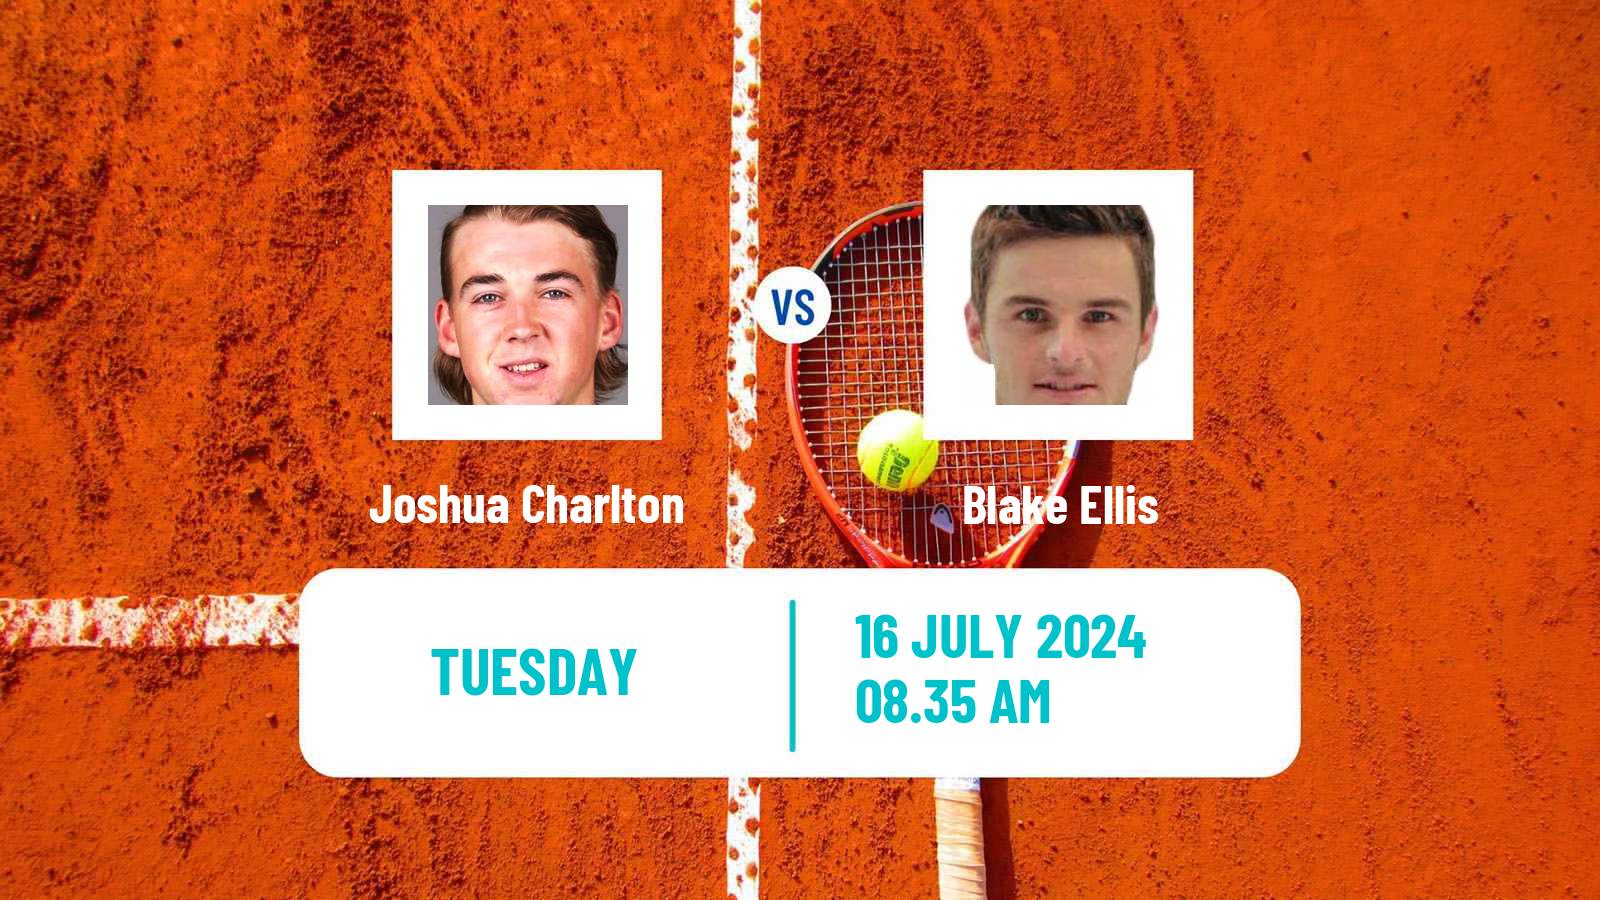 Tennis ITF M25 Nottingham 4 Men Joshua Charlton - Blake Ellis